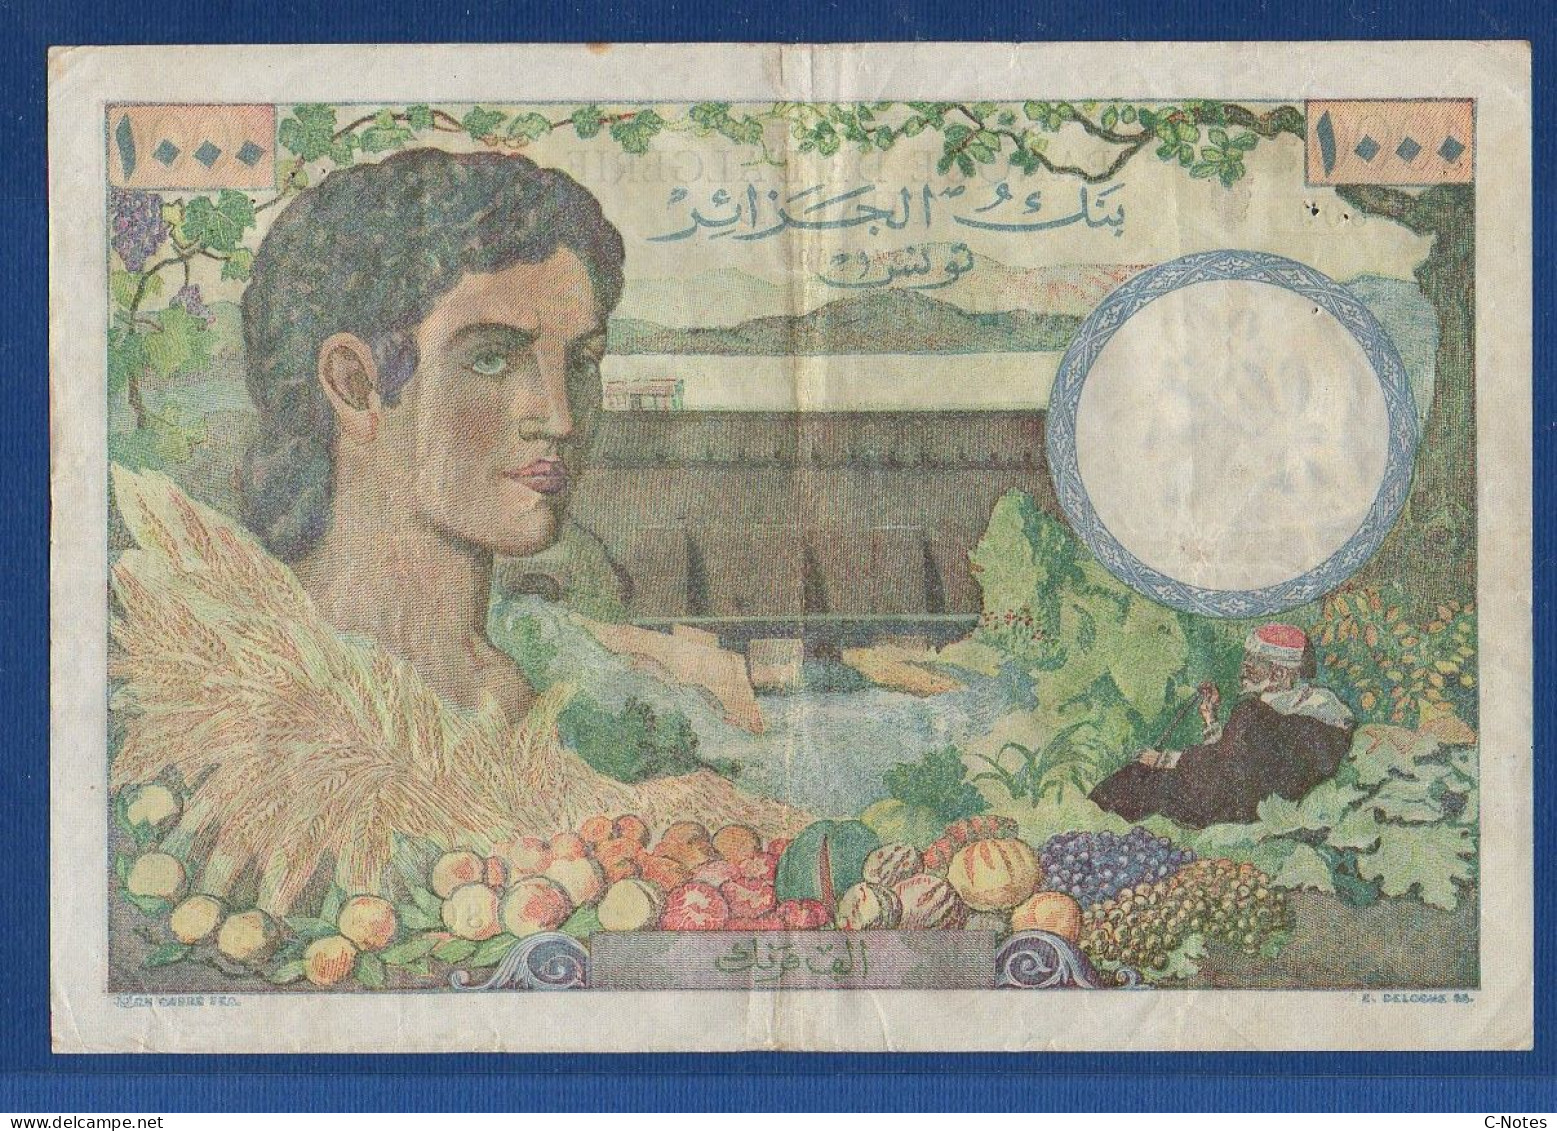 TUNISIA - P.26 – 1000 Francs 04.09.1946 F/VF, S/n A.230 809 - Tunisie